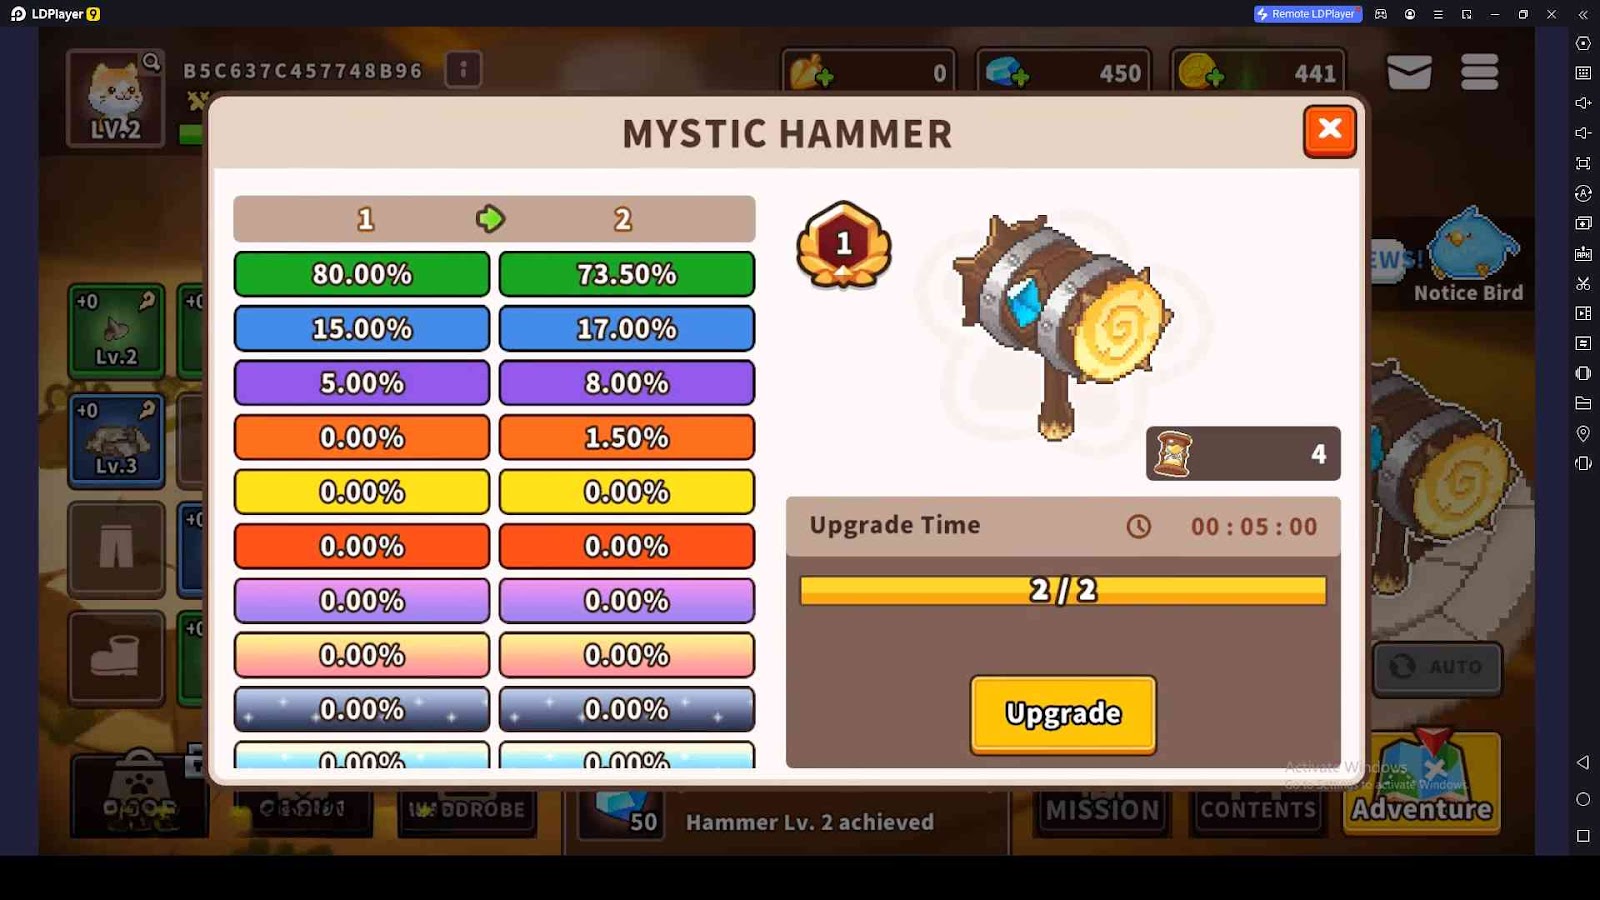 Upgrade the Mystic Hammer